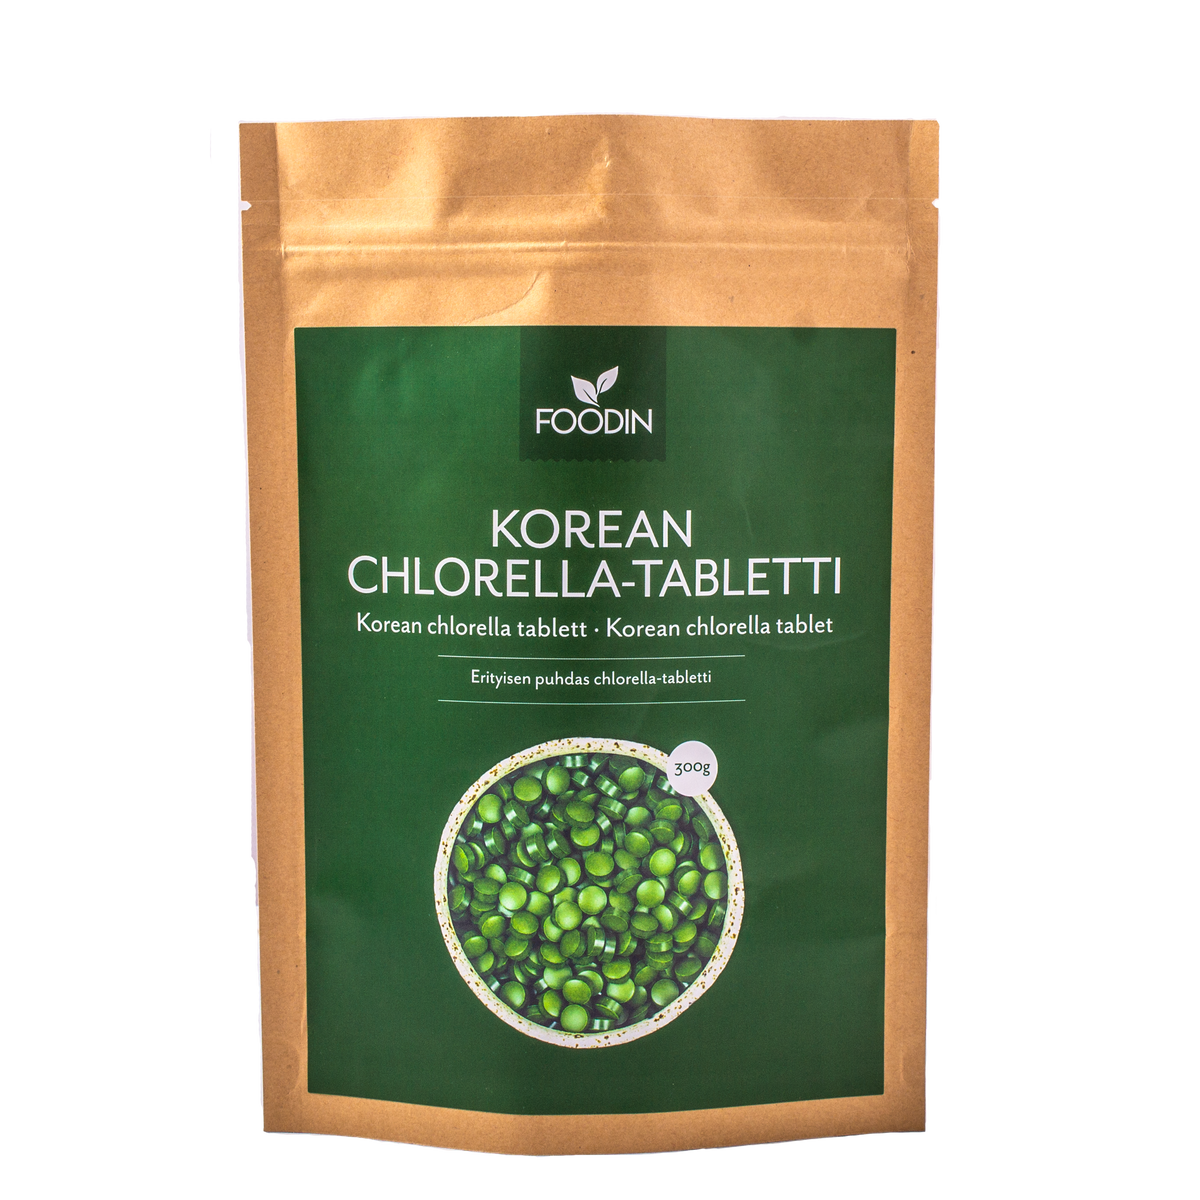 Foodin Korean Chlorella tabletti 300 g